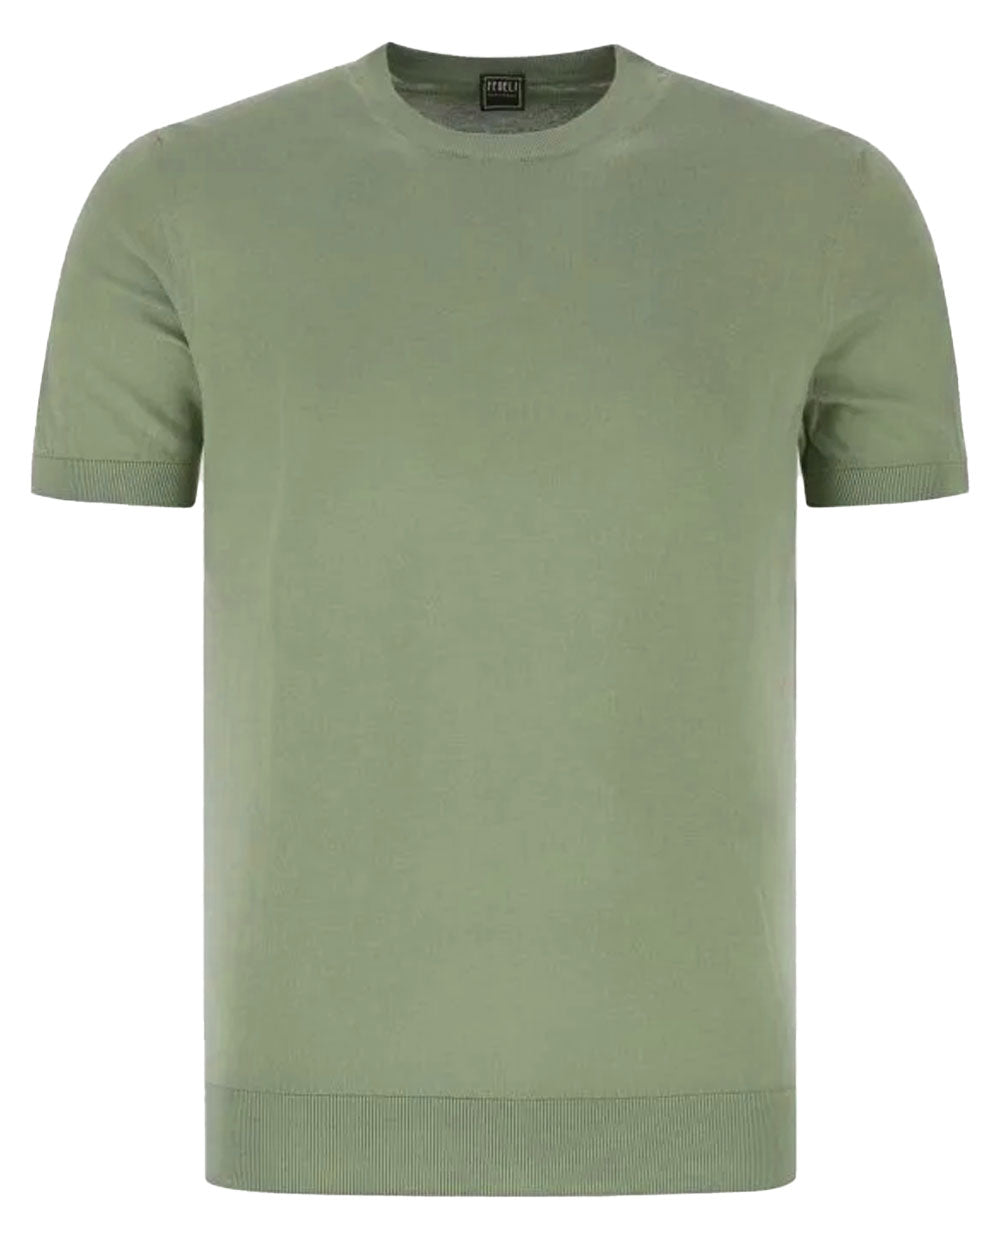 Supima Cotton Shirt in Military